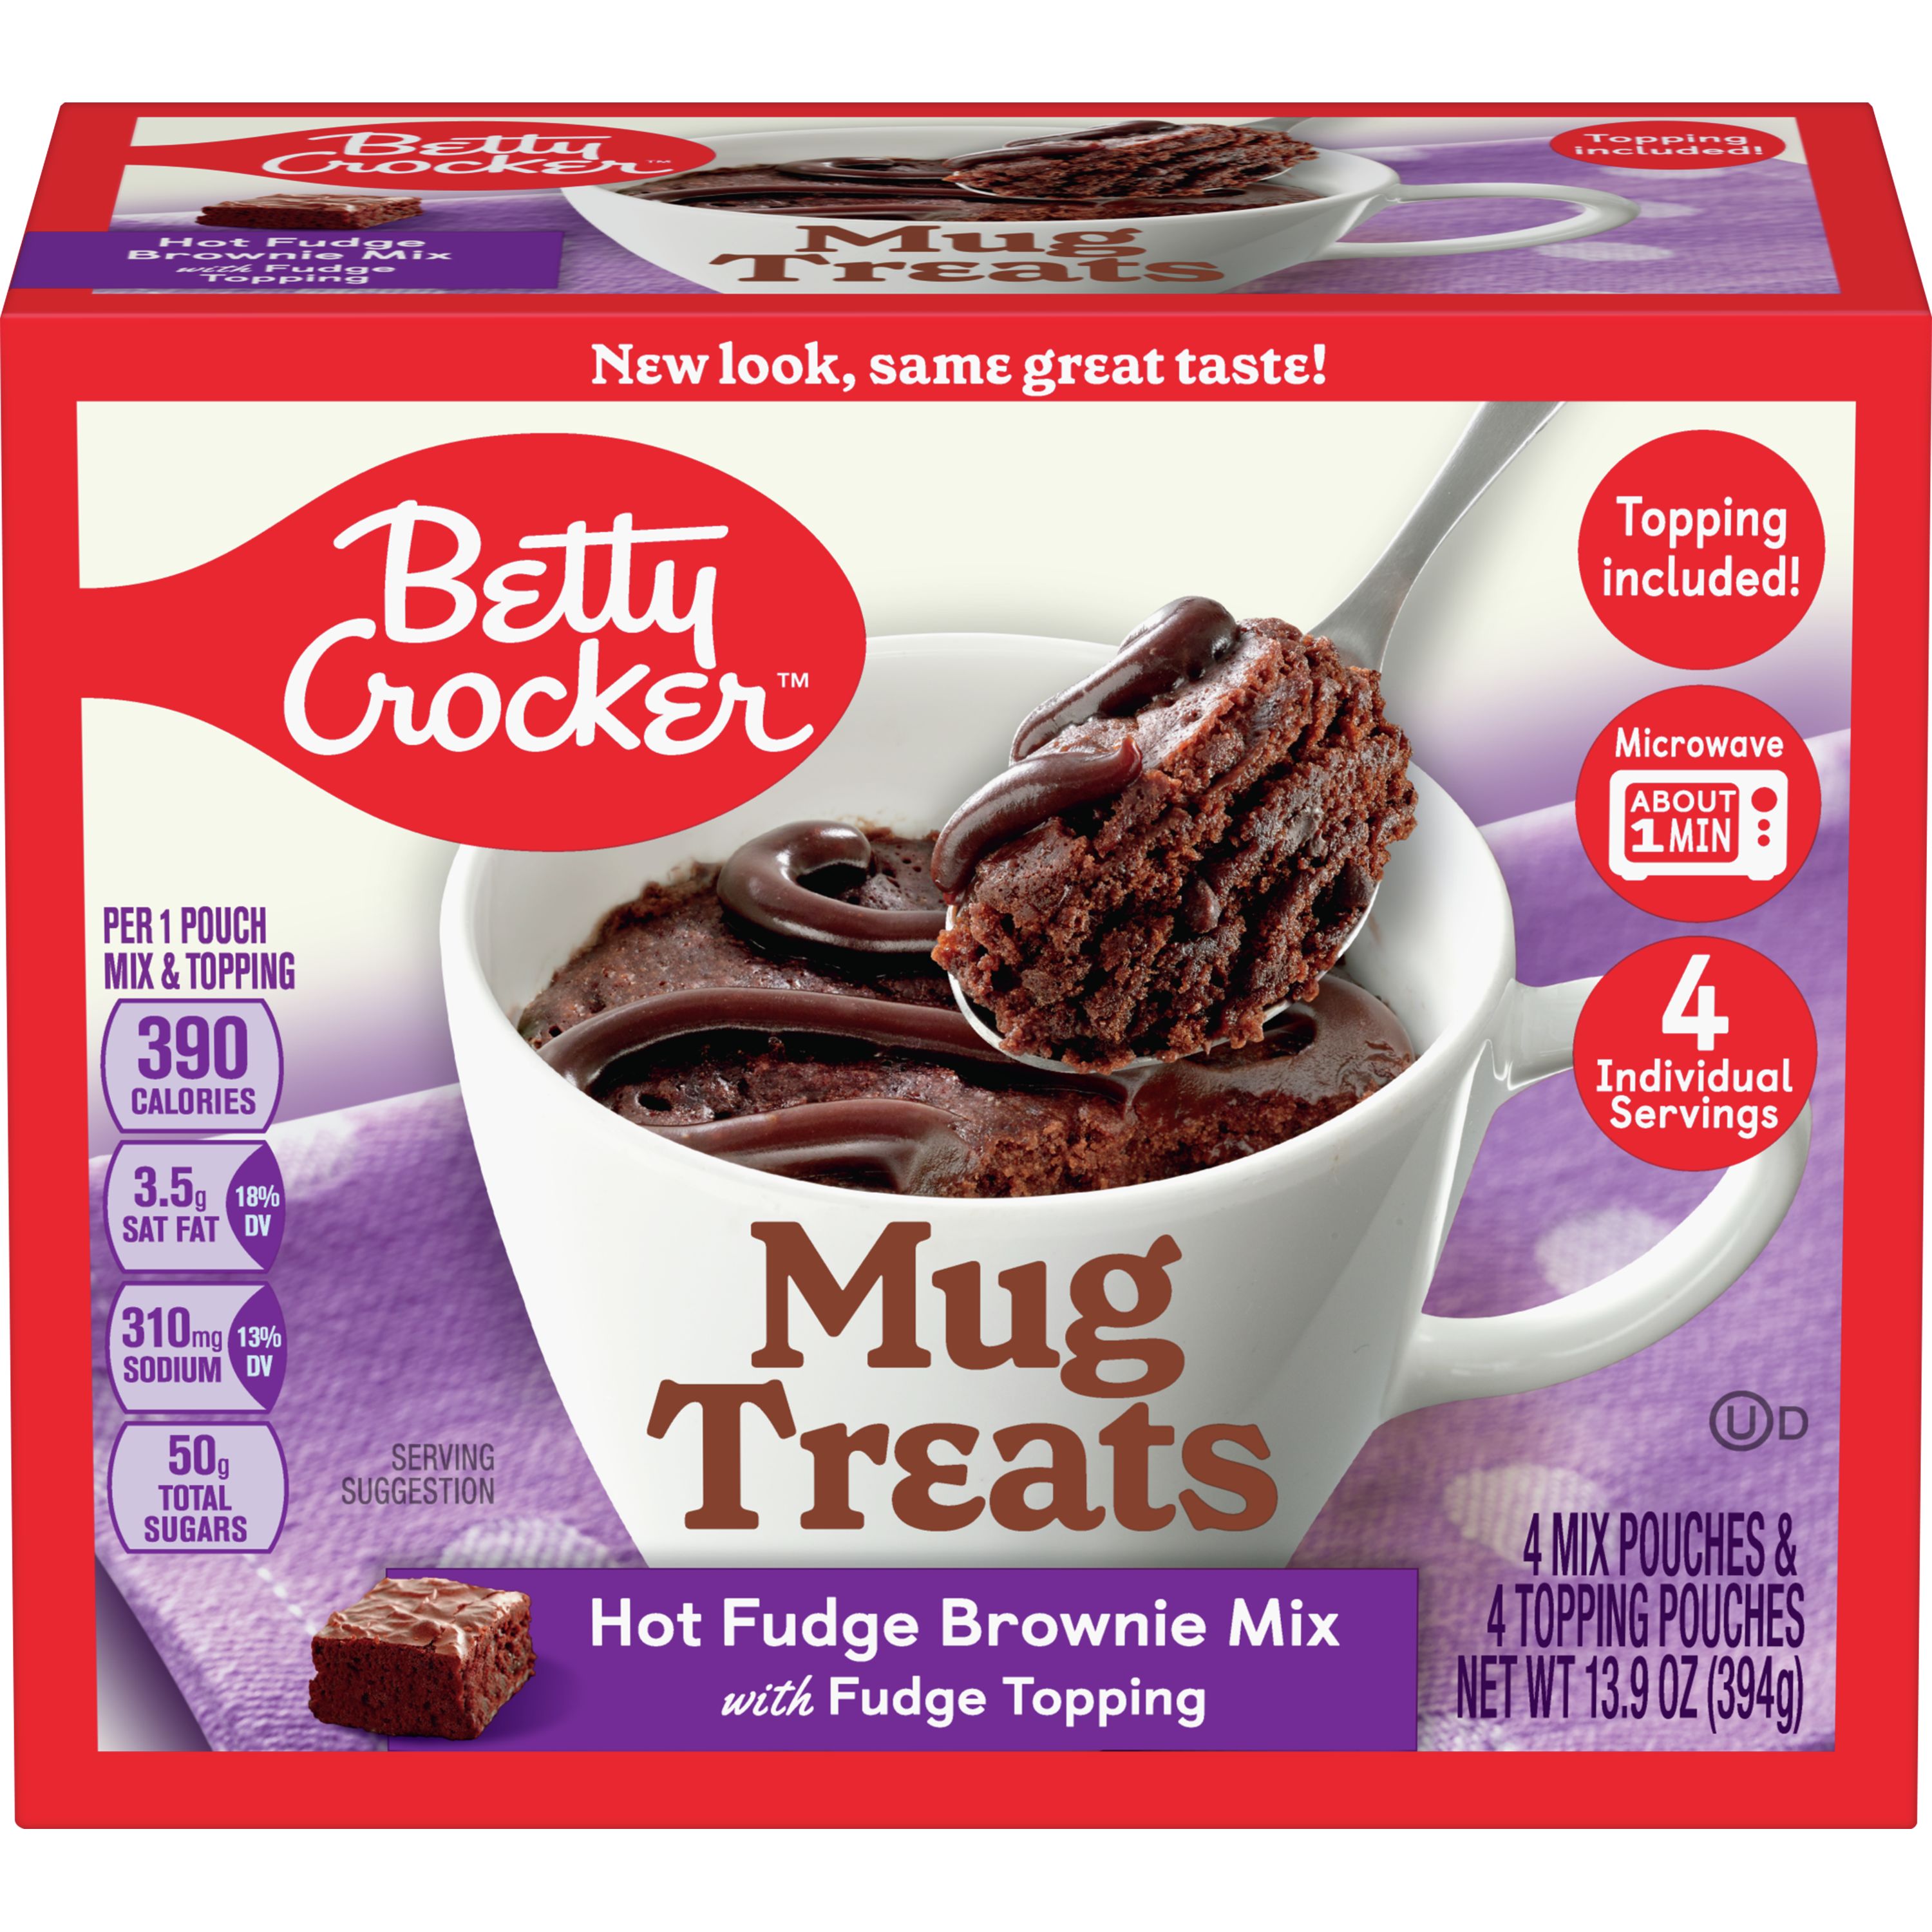 Crocker™ Hot Fudge Brownie Mix Mug Treats with Fudge - BettyCrocker.com